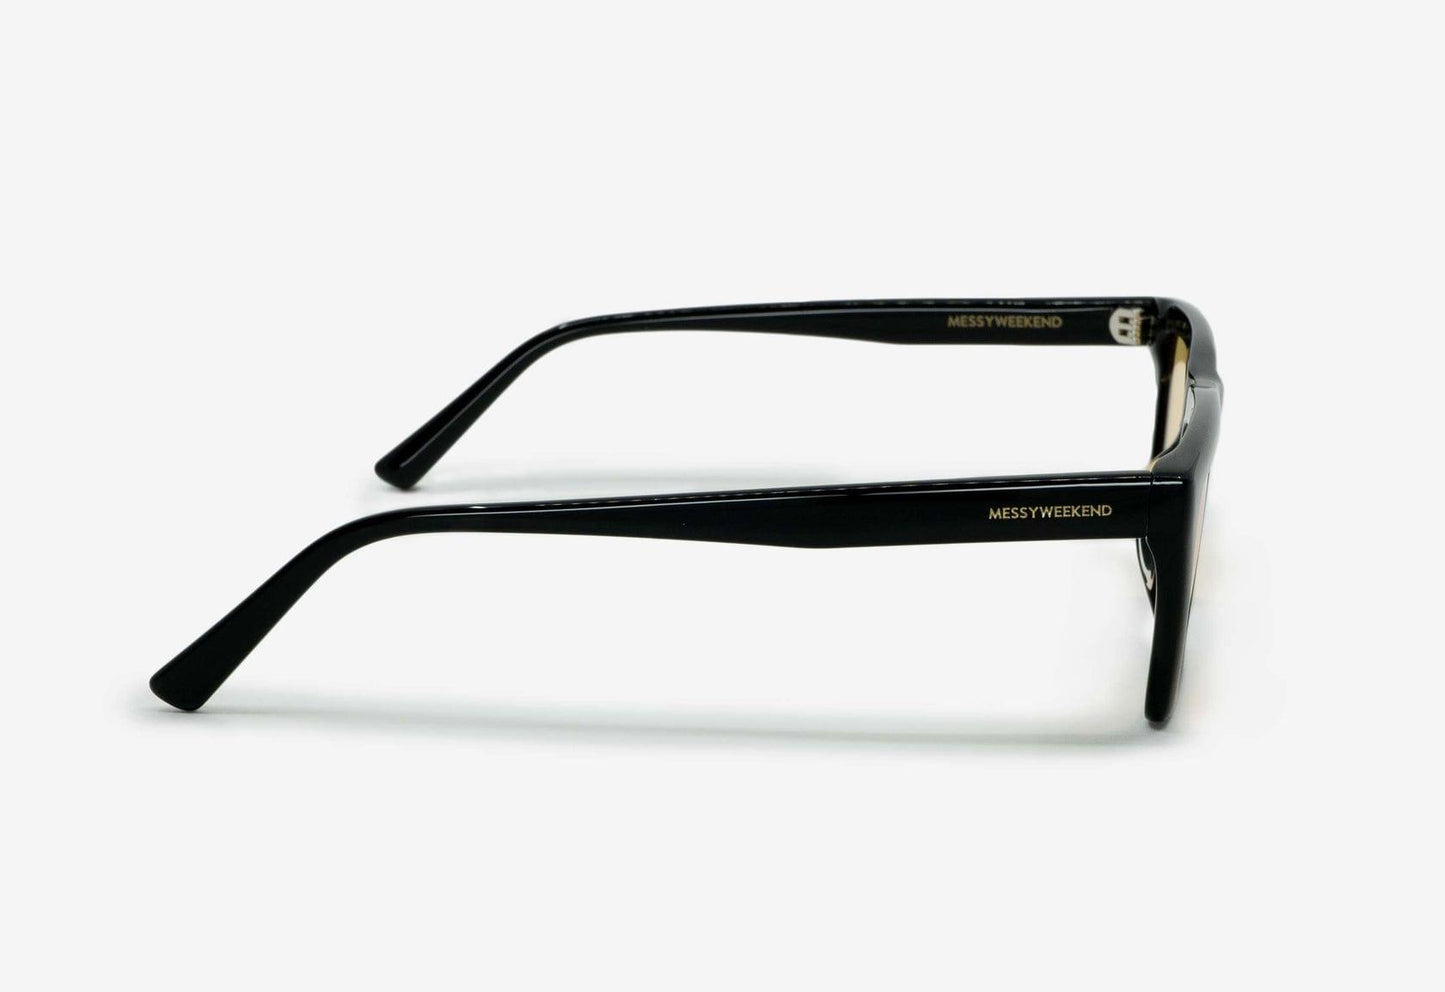 Corey, Rectangular sunglasses for men and women yellow lens UV400 protection